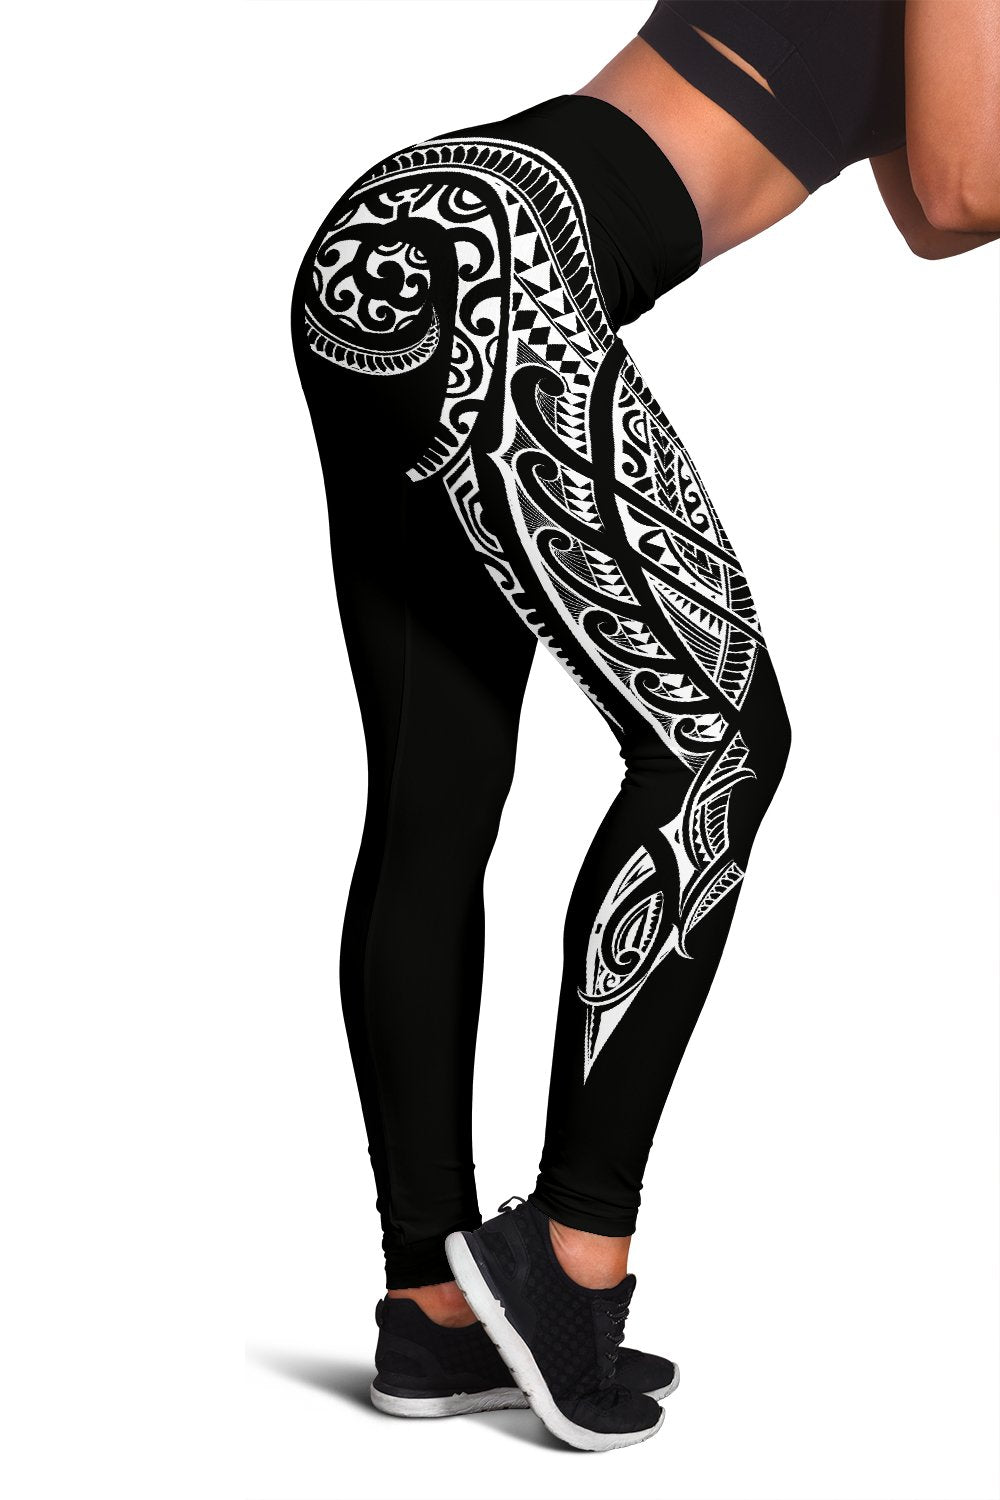 cook-islands-state-tattoo-swirly-white-polynesian-womens-leggings